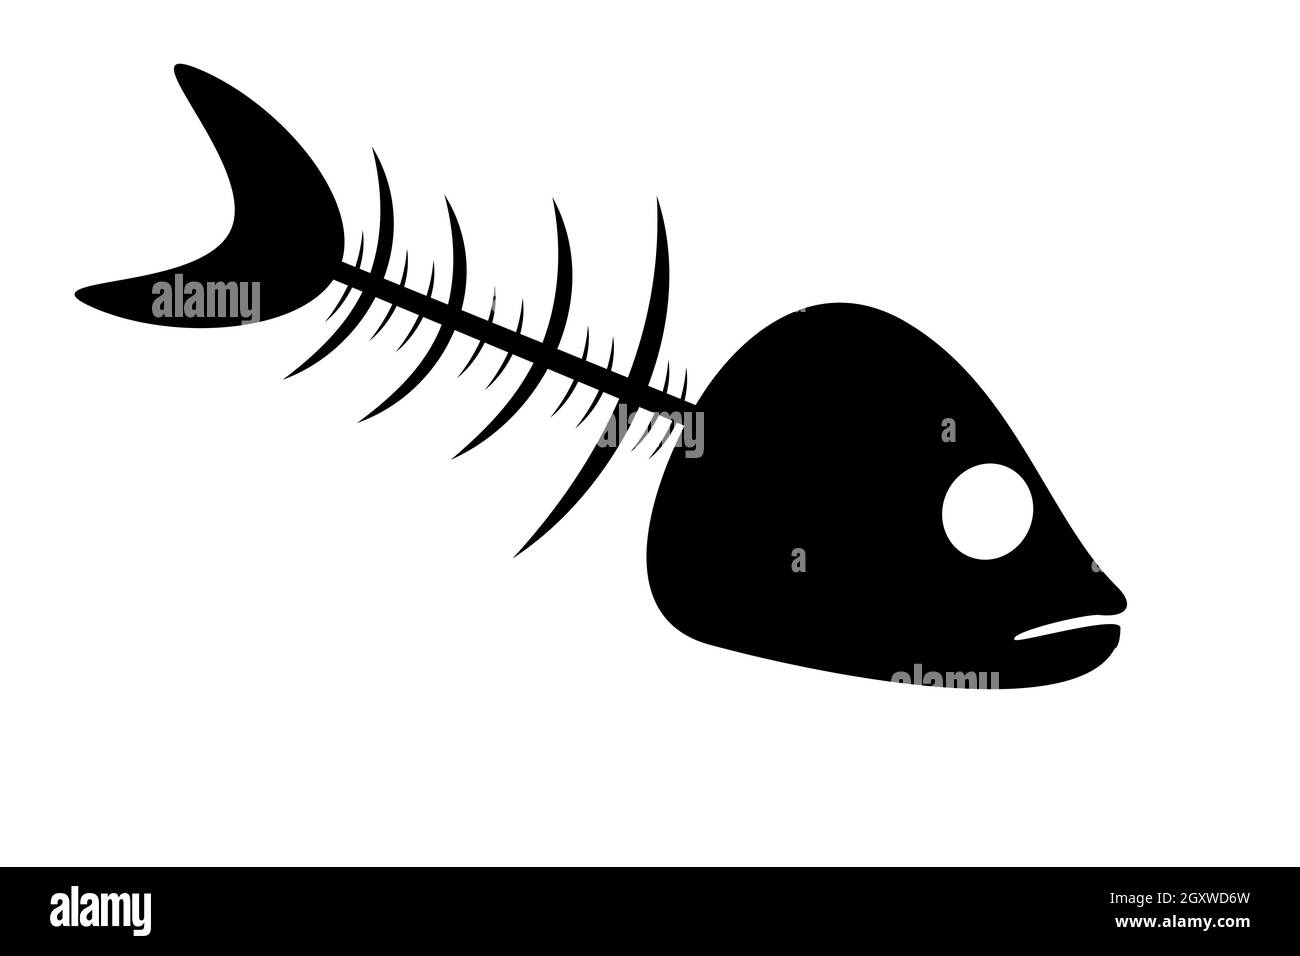 Fishbone icon isolated on white background. Black fish bone silhouette. Fish skeleton simple sign. Organic waste mark design.Stock vector illustration Stock Vector